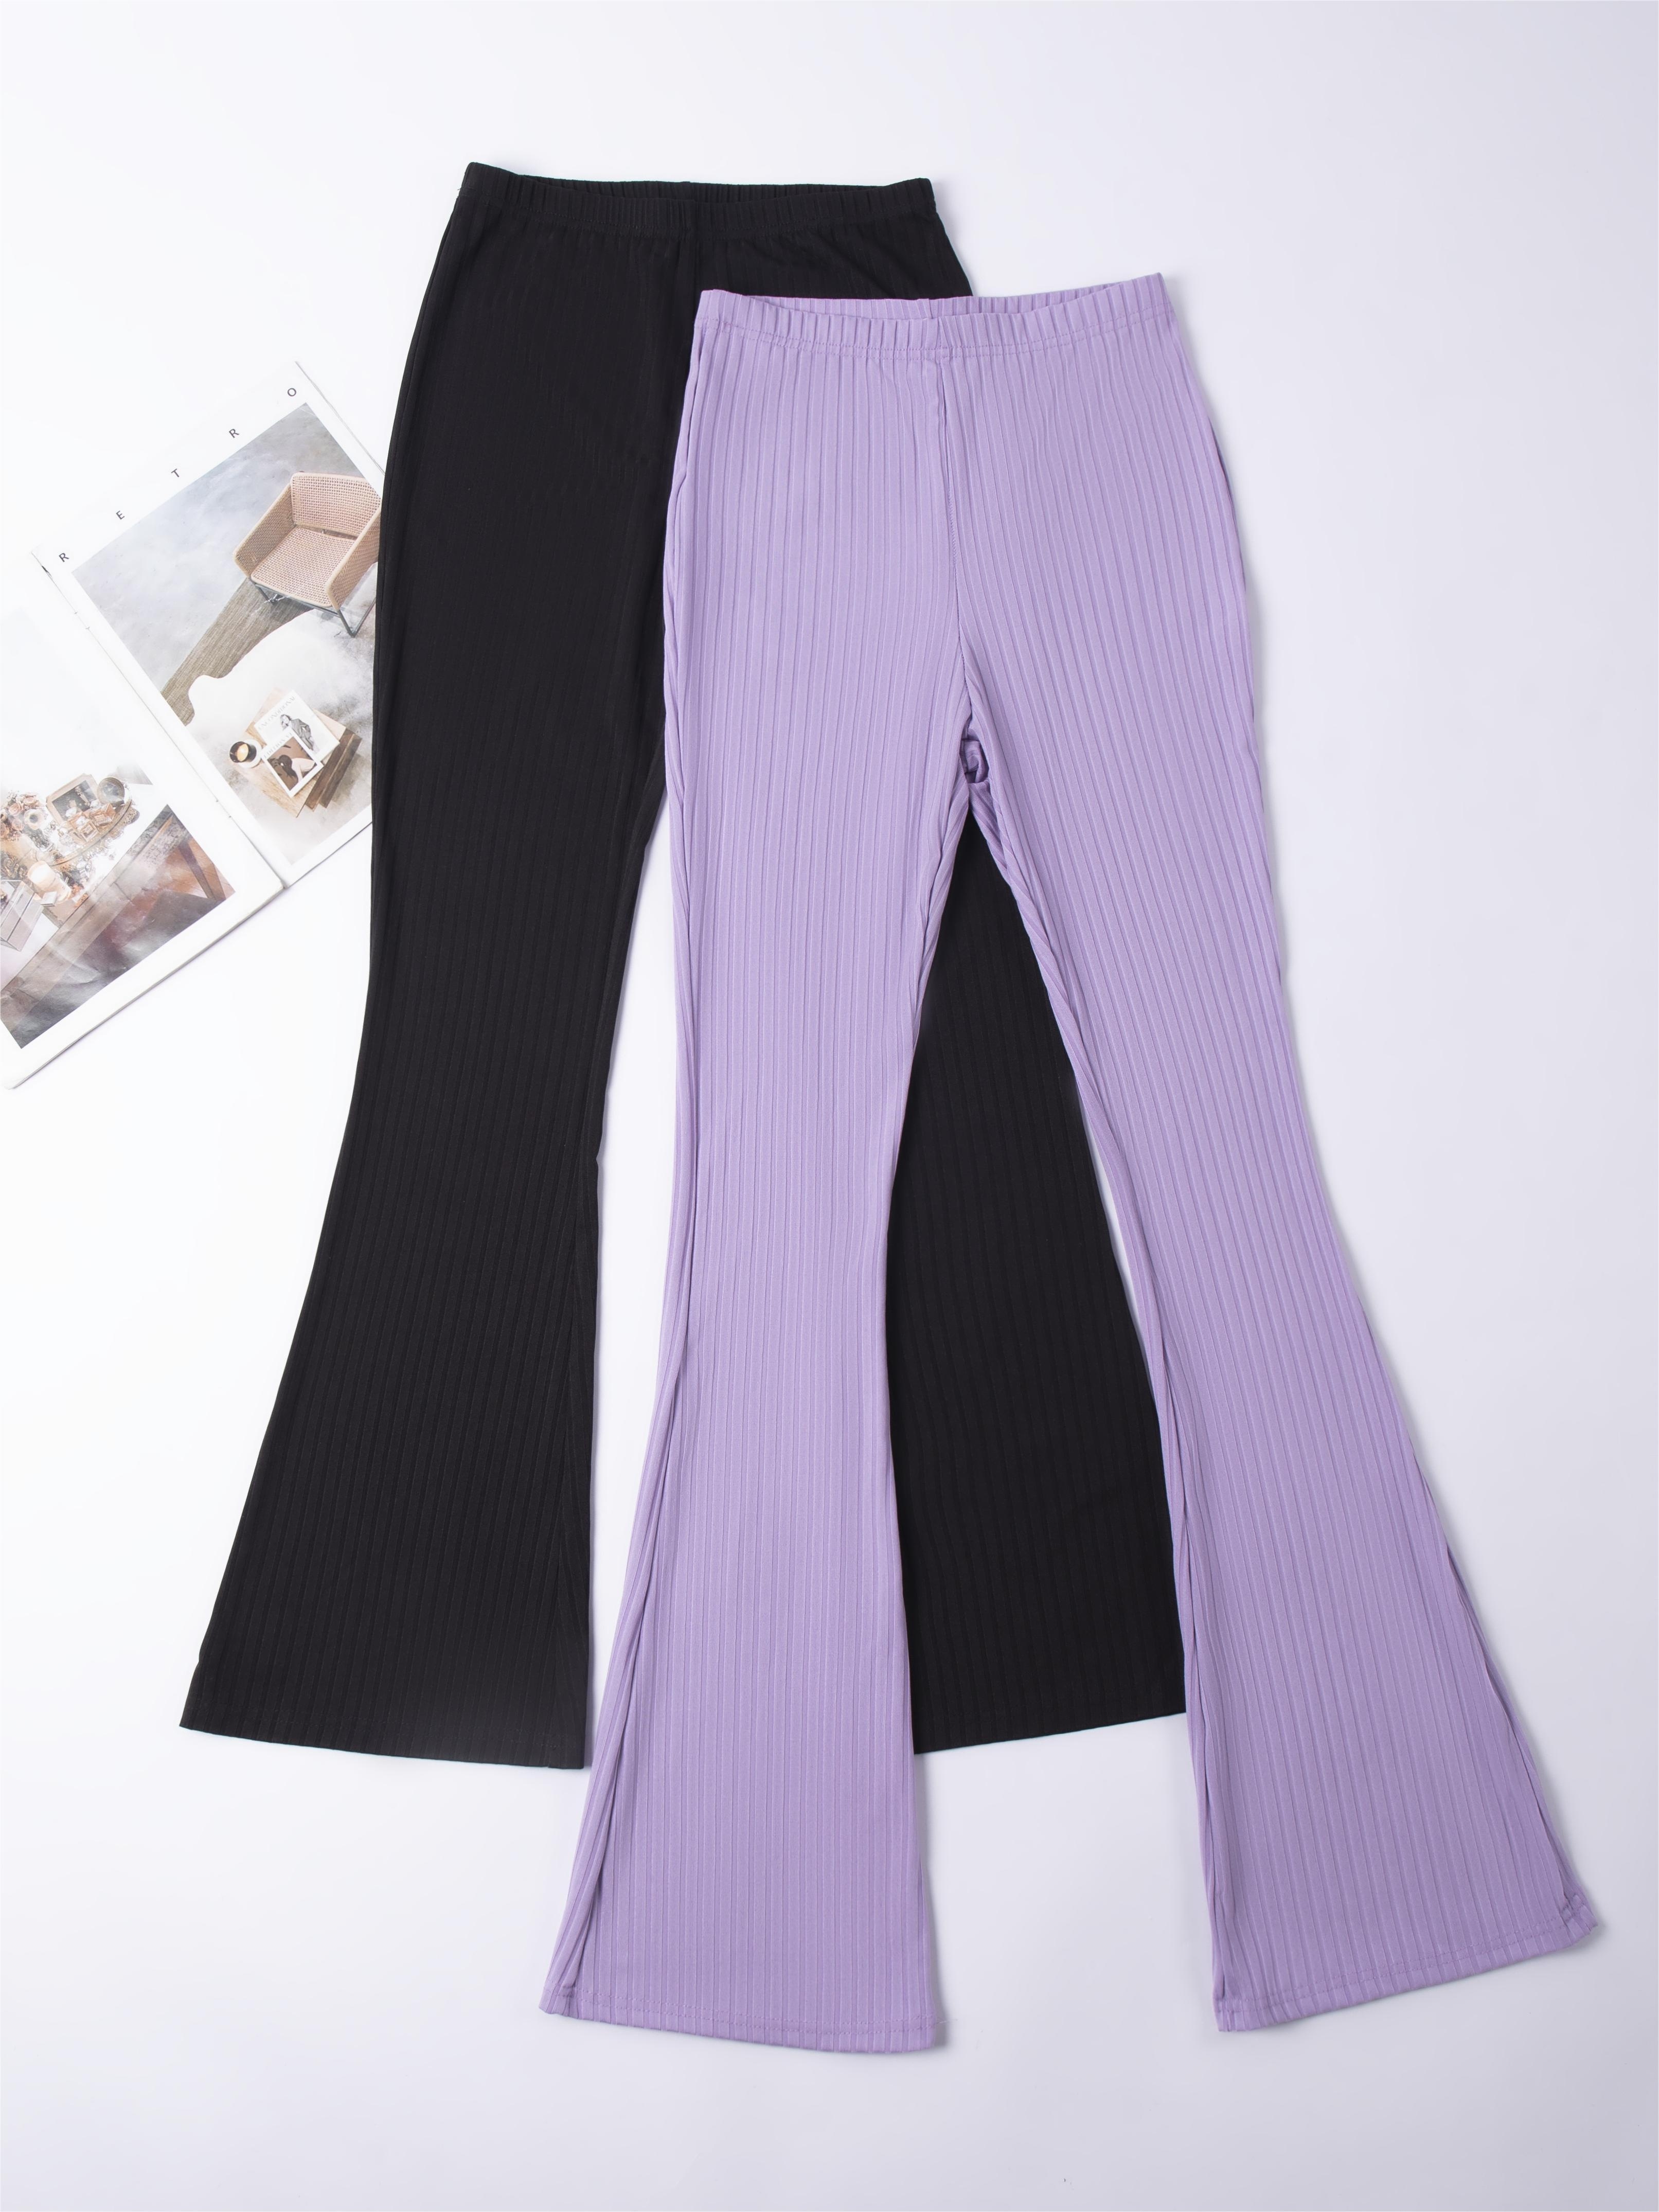 Solid Loose Rib Knit Pants, Casual Elastic High Waist Comfy Pants, Women's  Clothing